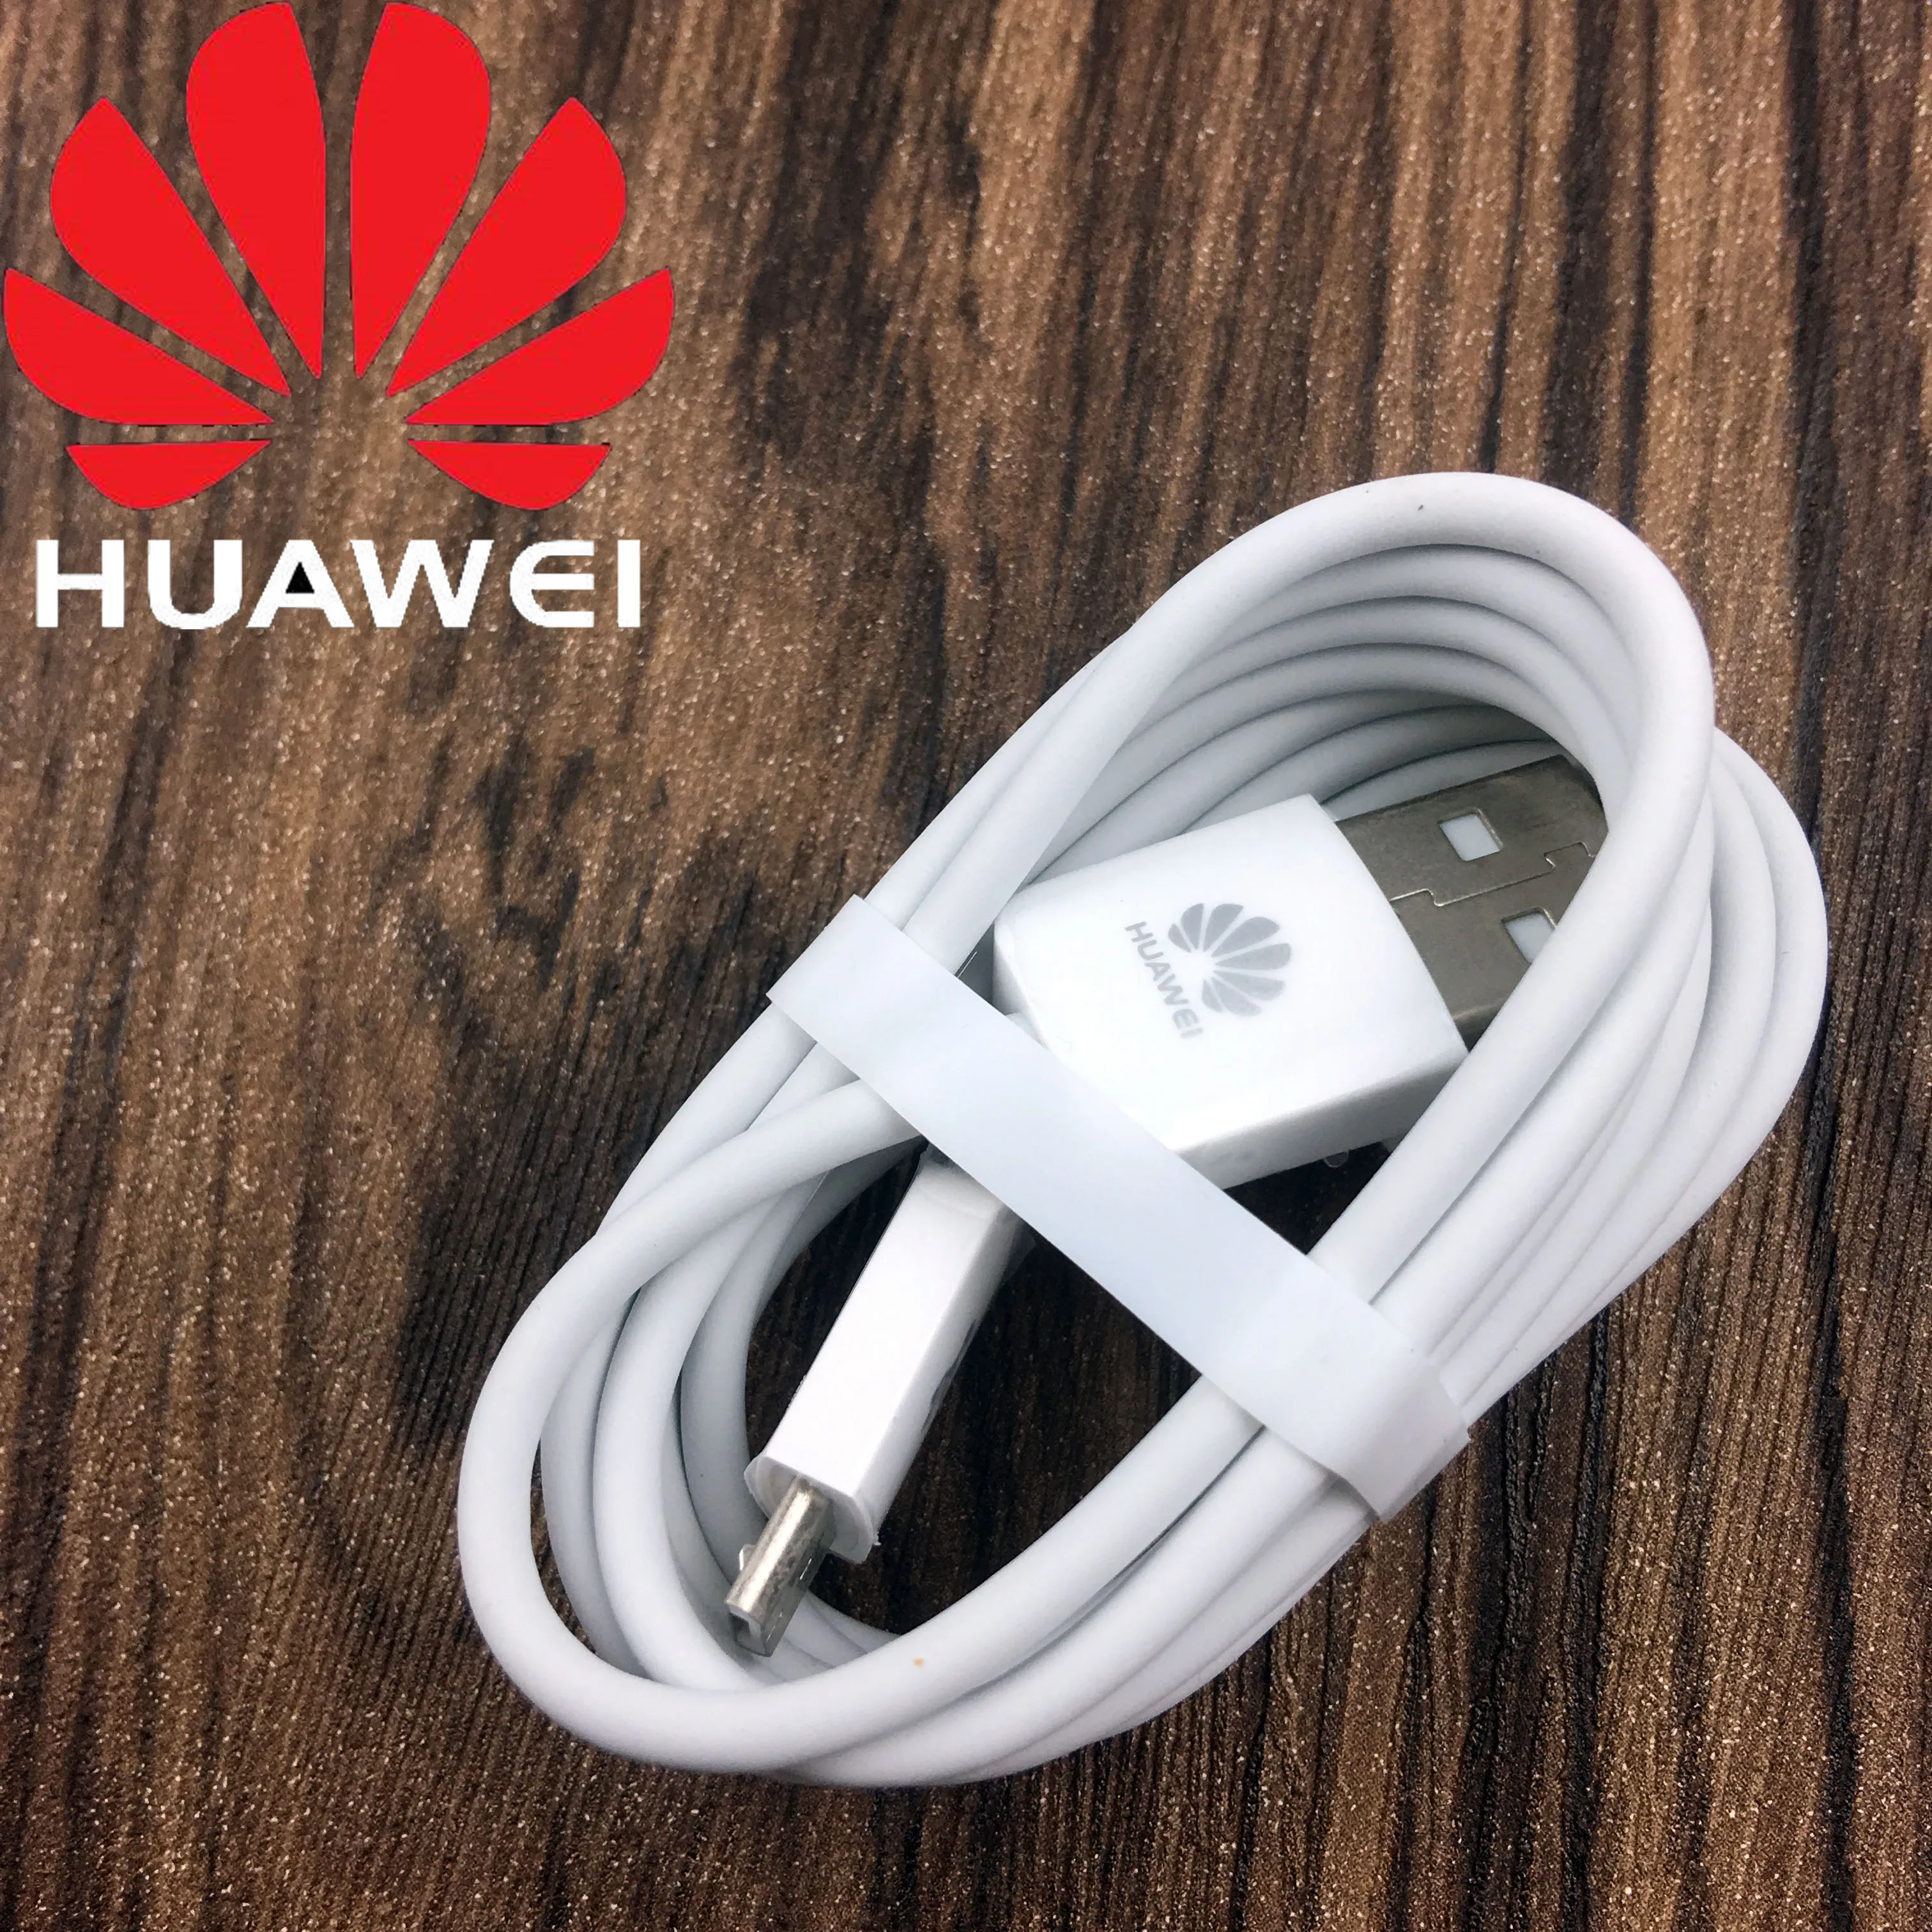 

Original Huawei Honor 7x Charge adaptor 1a Micro cable USB honor 7x 3c 3x 4a 4c 4x g7 p7 p6 5c 6a 5x 6 6c 6x